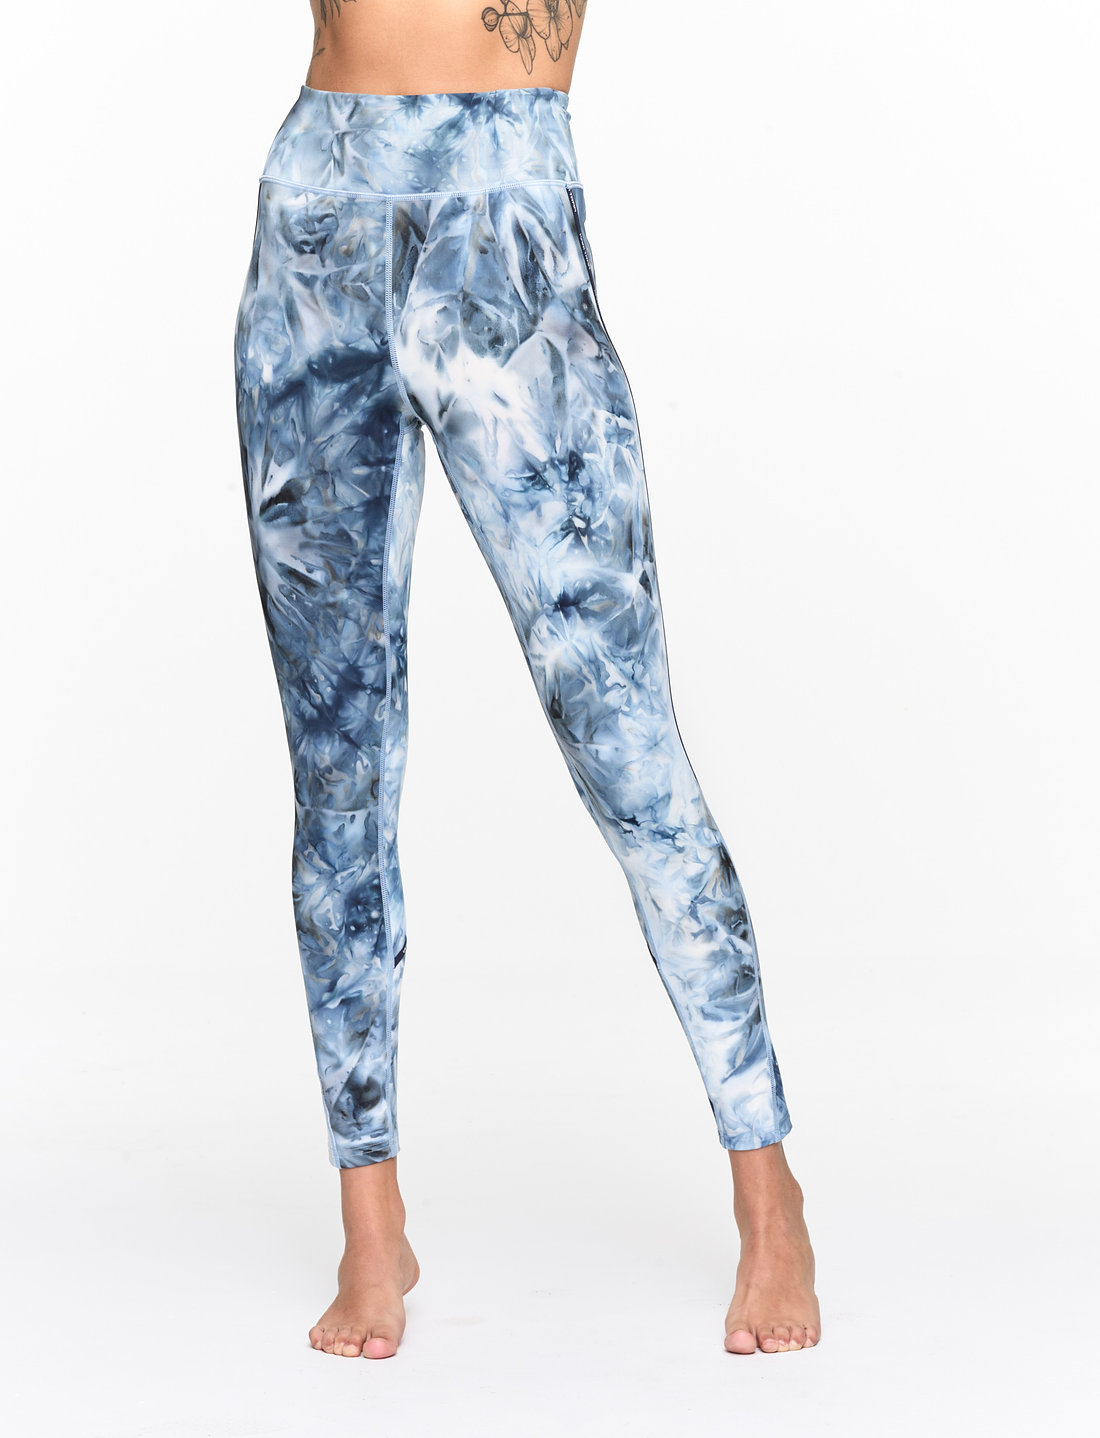 Kari Traa Ellen Tights – leggings & tights – shop at Booztlet